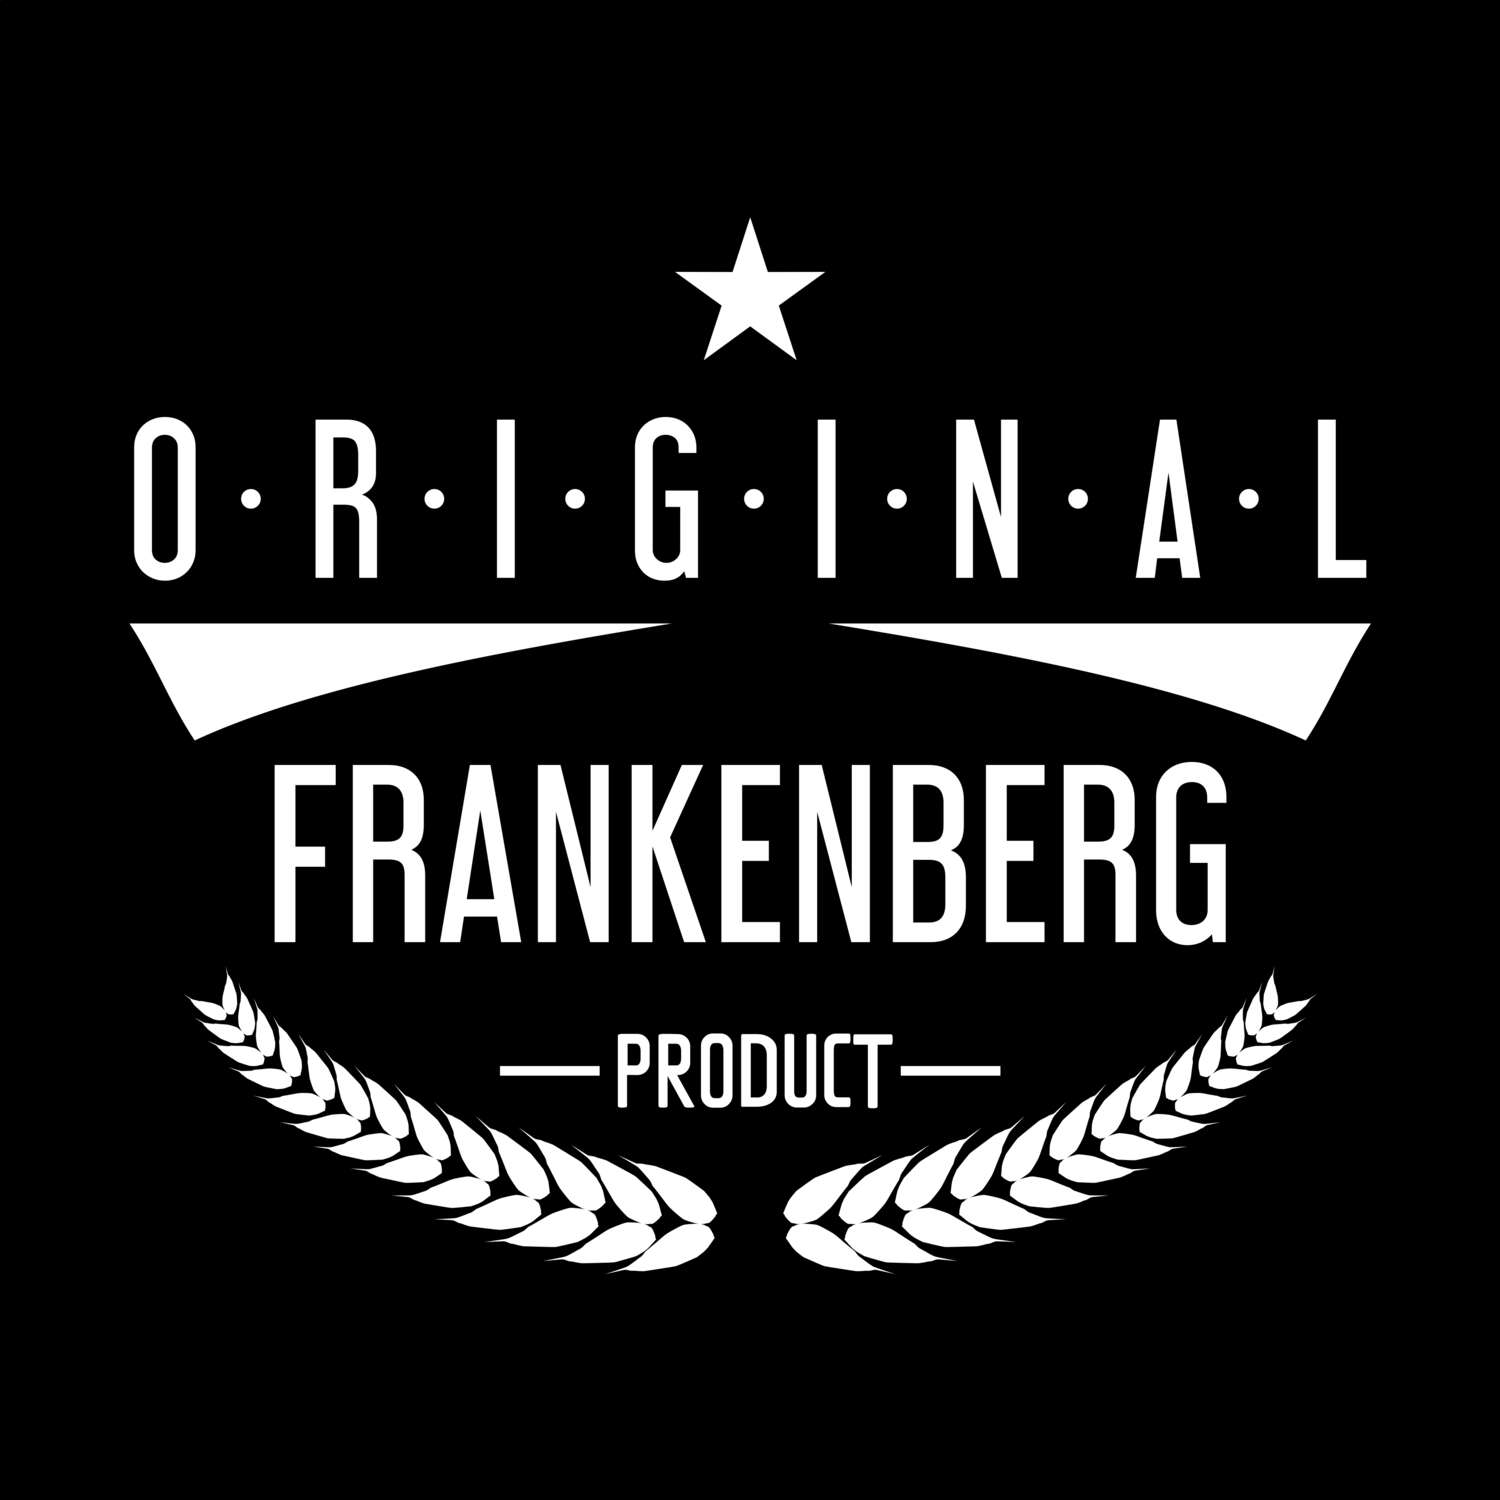 Frankenberg T-Shirt »Original Product«